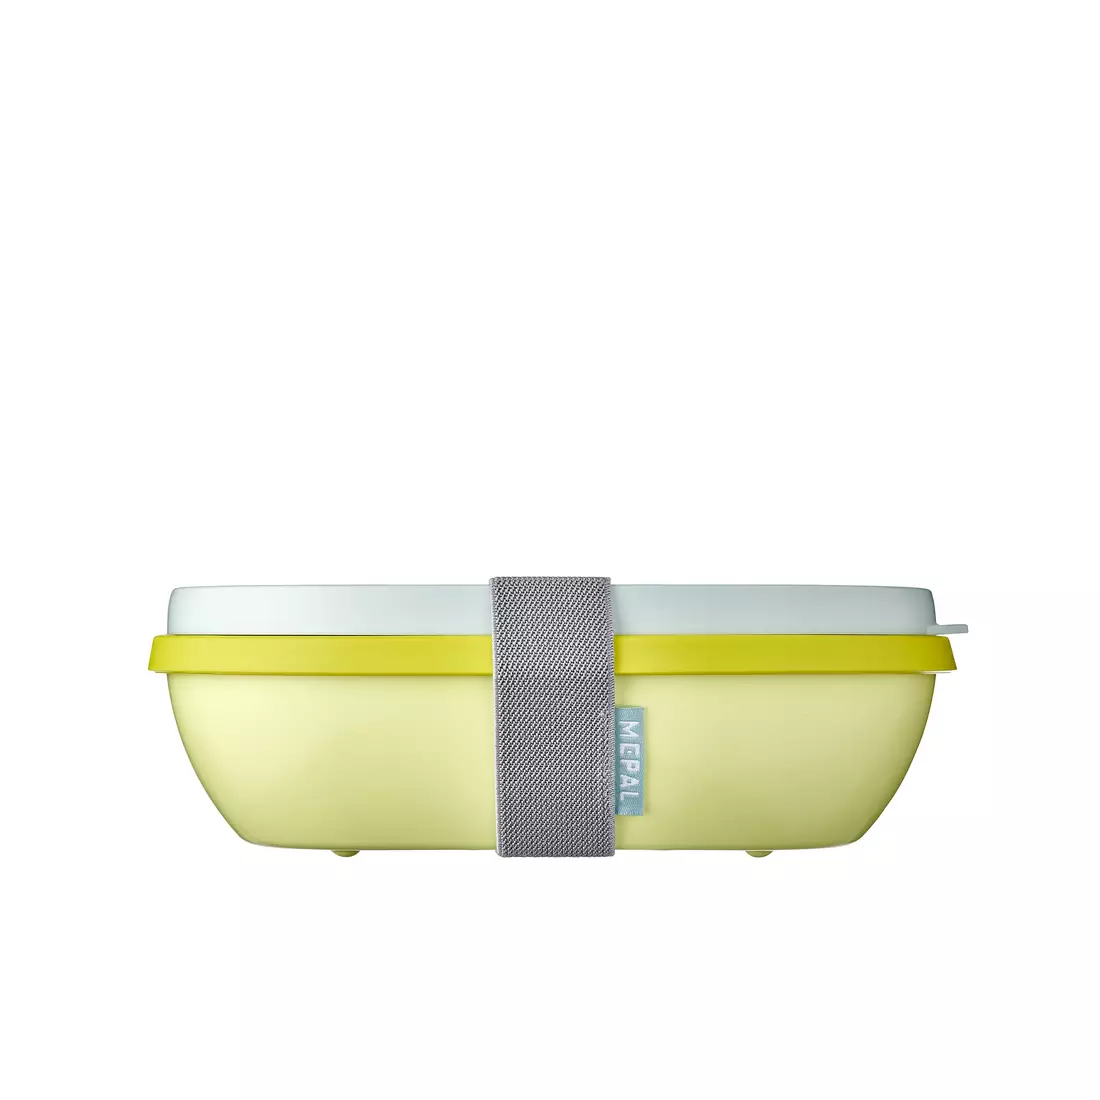 Mepal Ellipse Duo Lemon Vibe lunchbox, gelb-mint